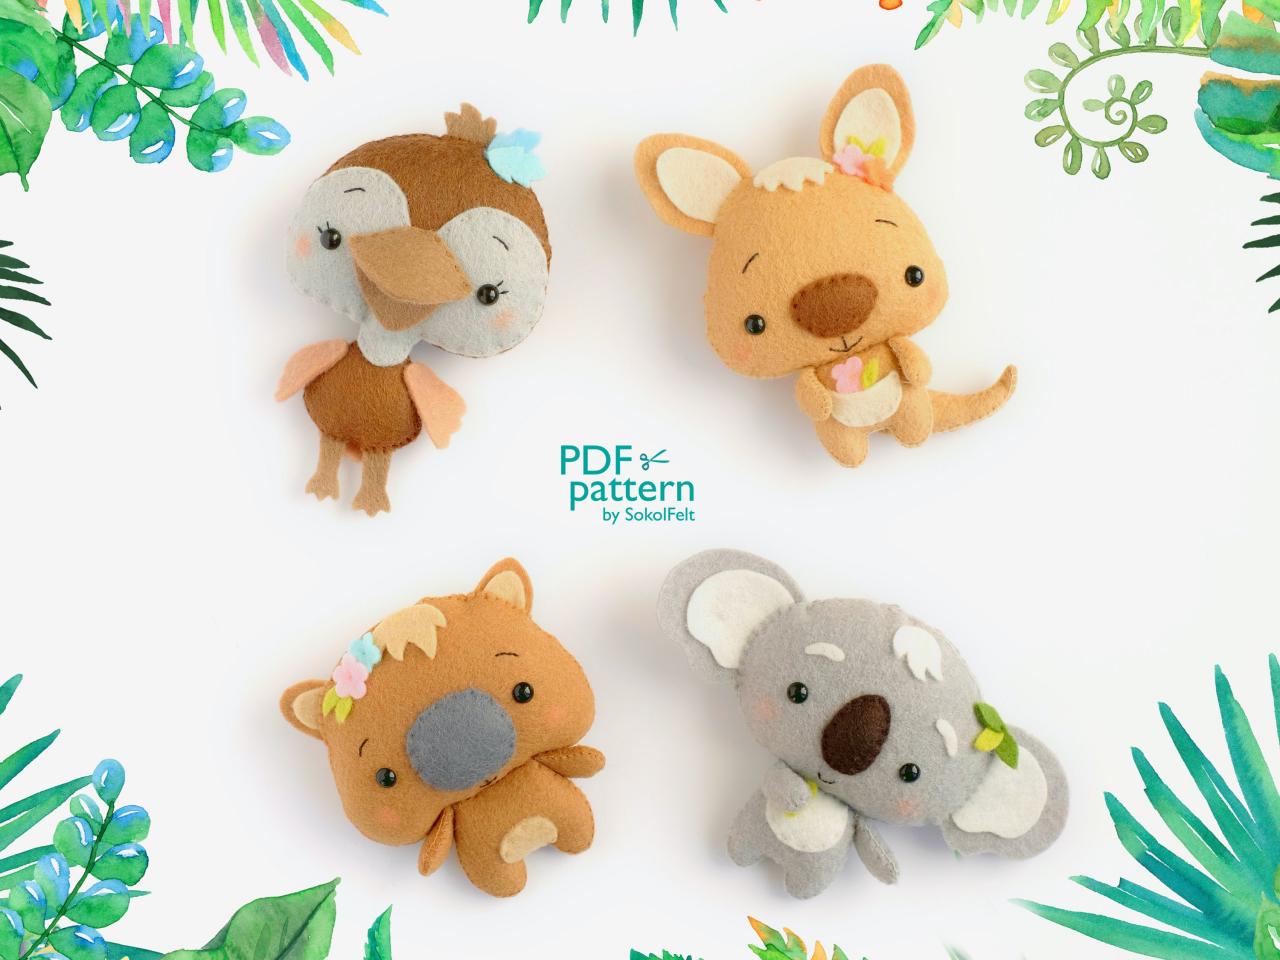 Set Of 4 Australian Animal Toy Pdf And Svg Patterns, Cute Felt Koala, Kangaroo, Emu And Wombat Plush Toys, Baby Crib Mobile Toys